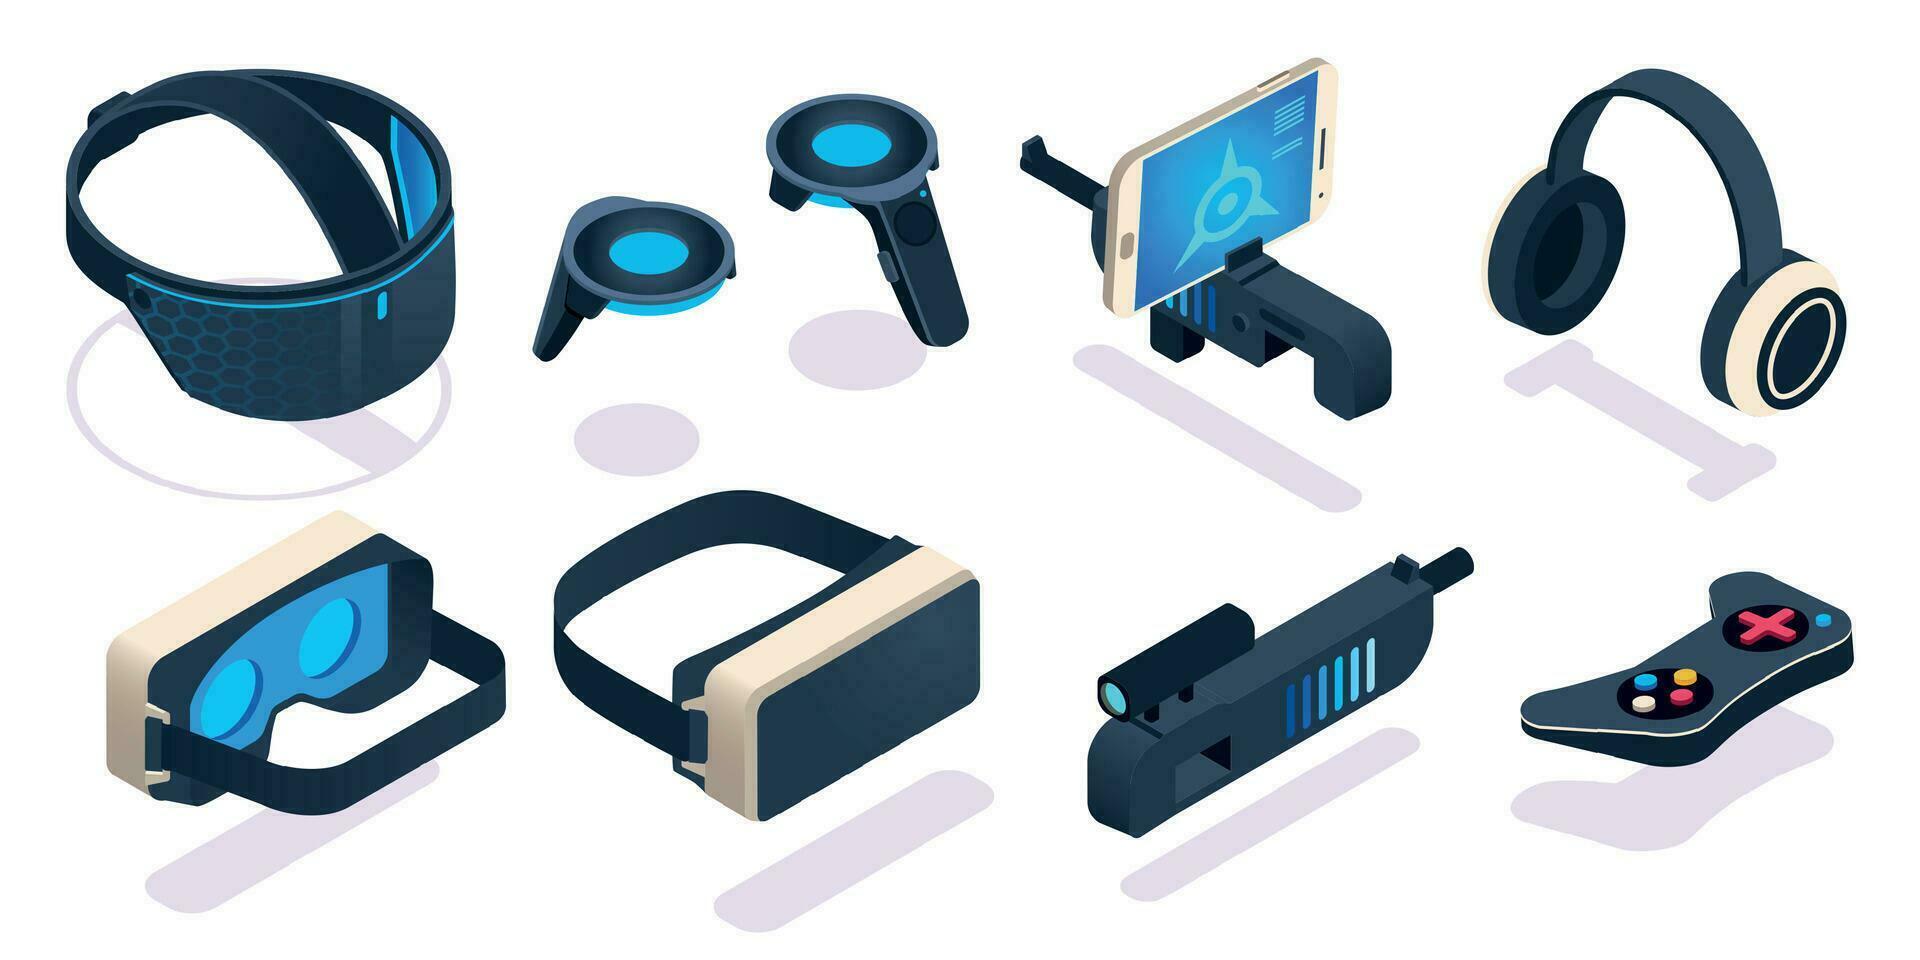 virtual realidad juego de azar equipo. digital dispositivo o portátil artilugio para juegos como 3d anteojos, auriculares, palanca de mando vector